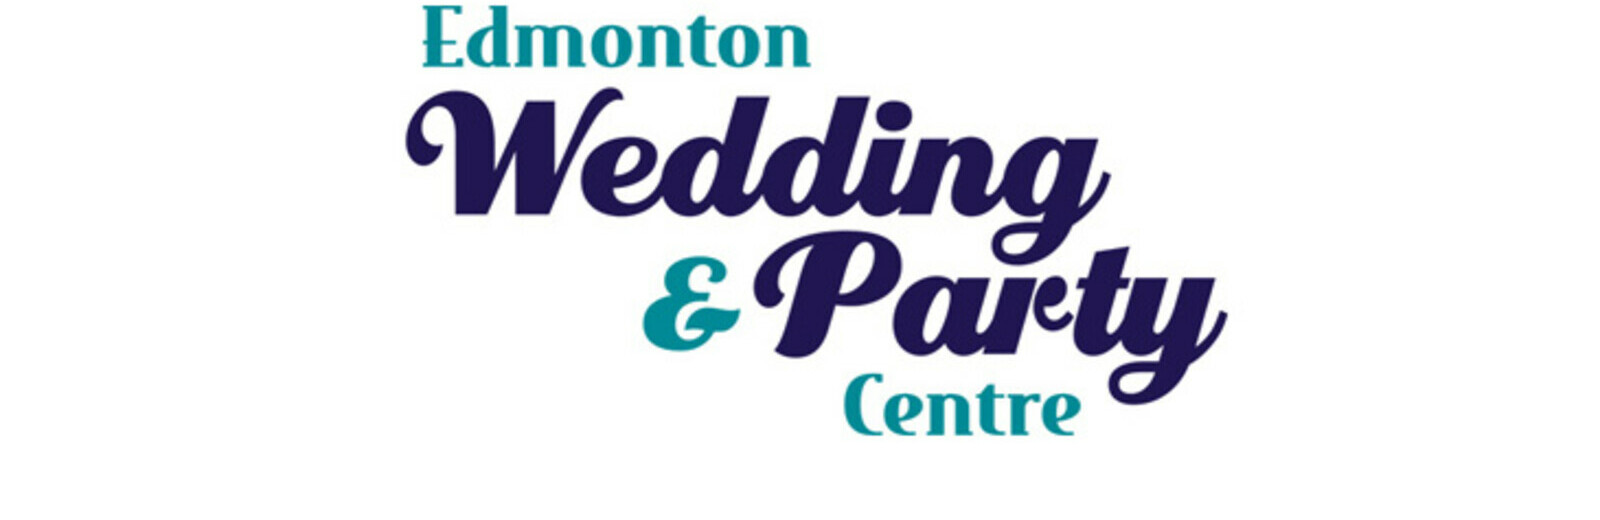 Shop Edmonton Wedding & Party Centre